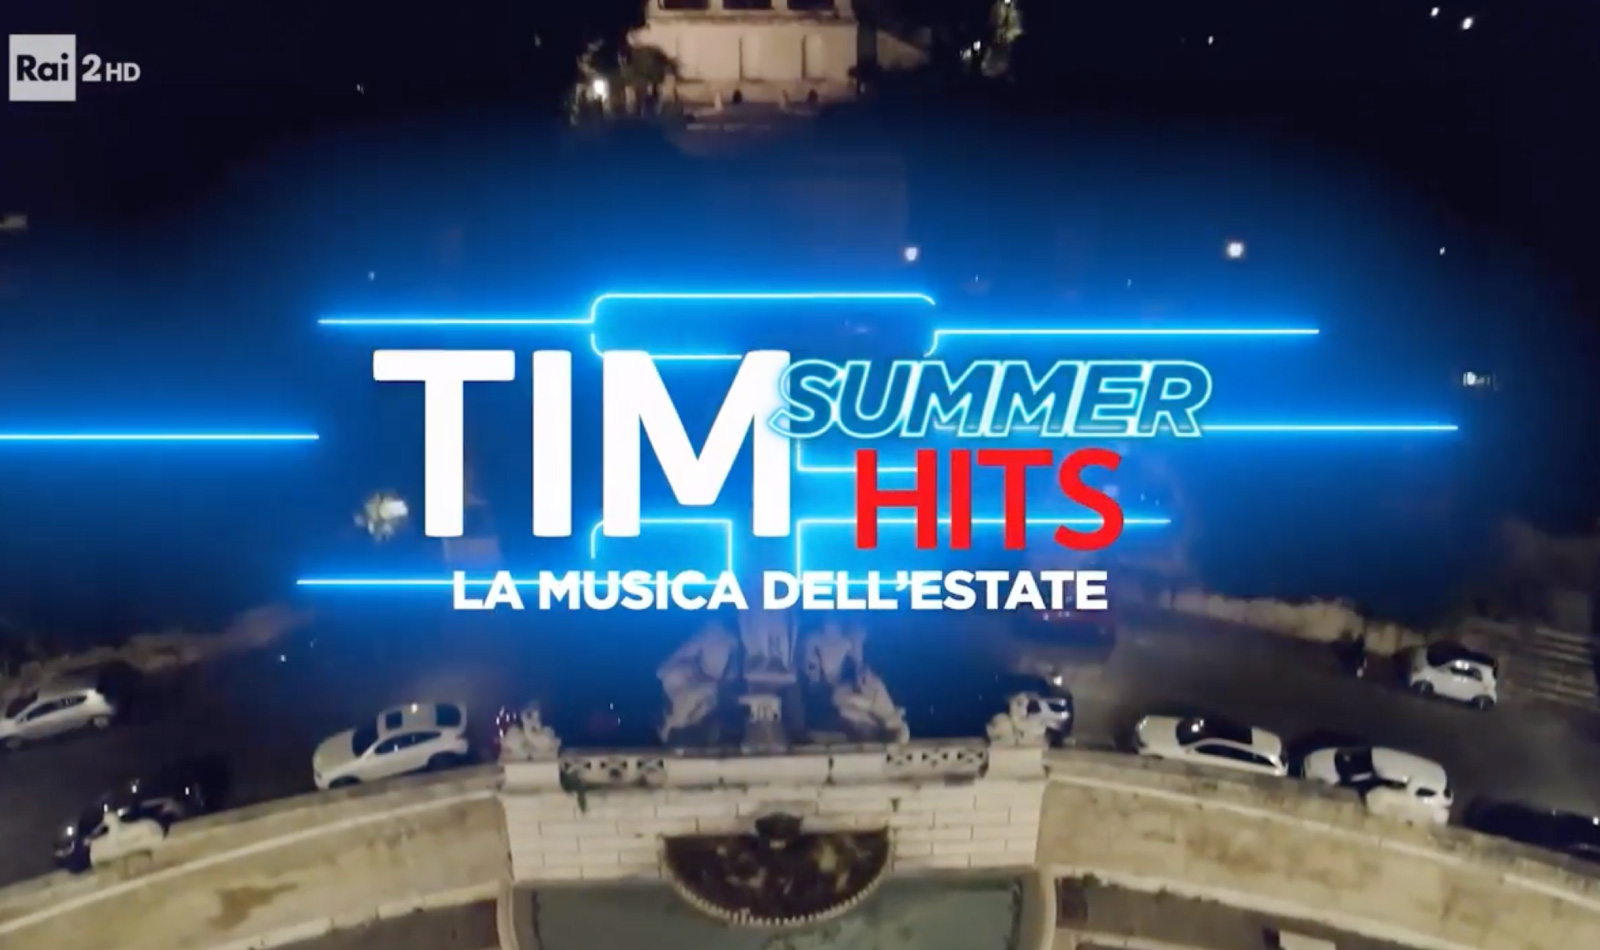 Tim Summer Hits